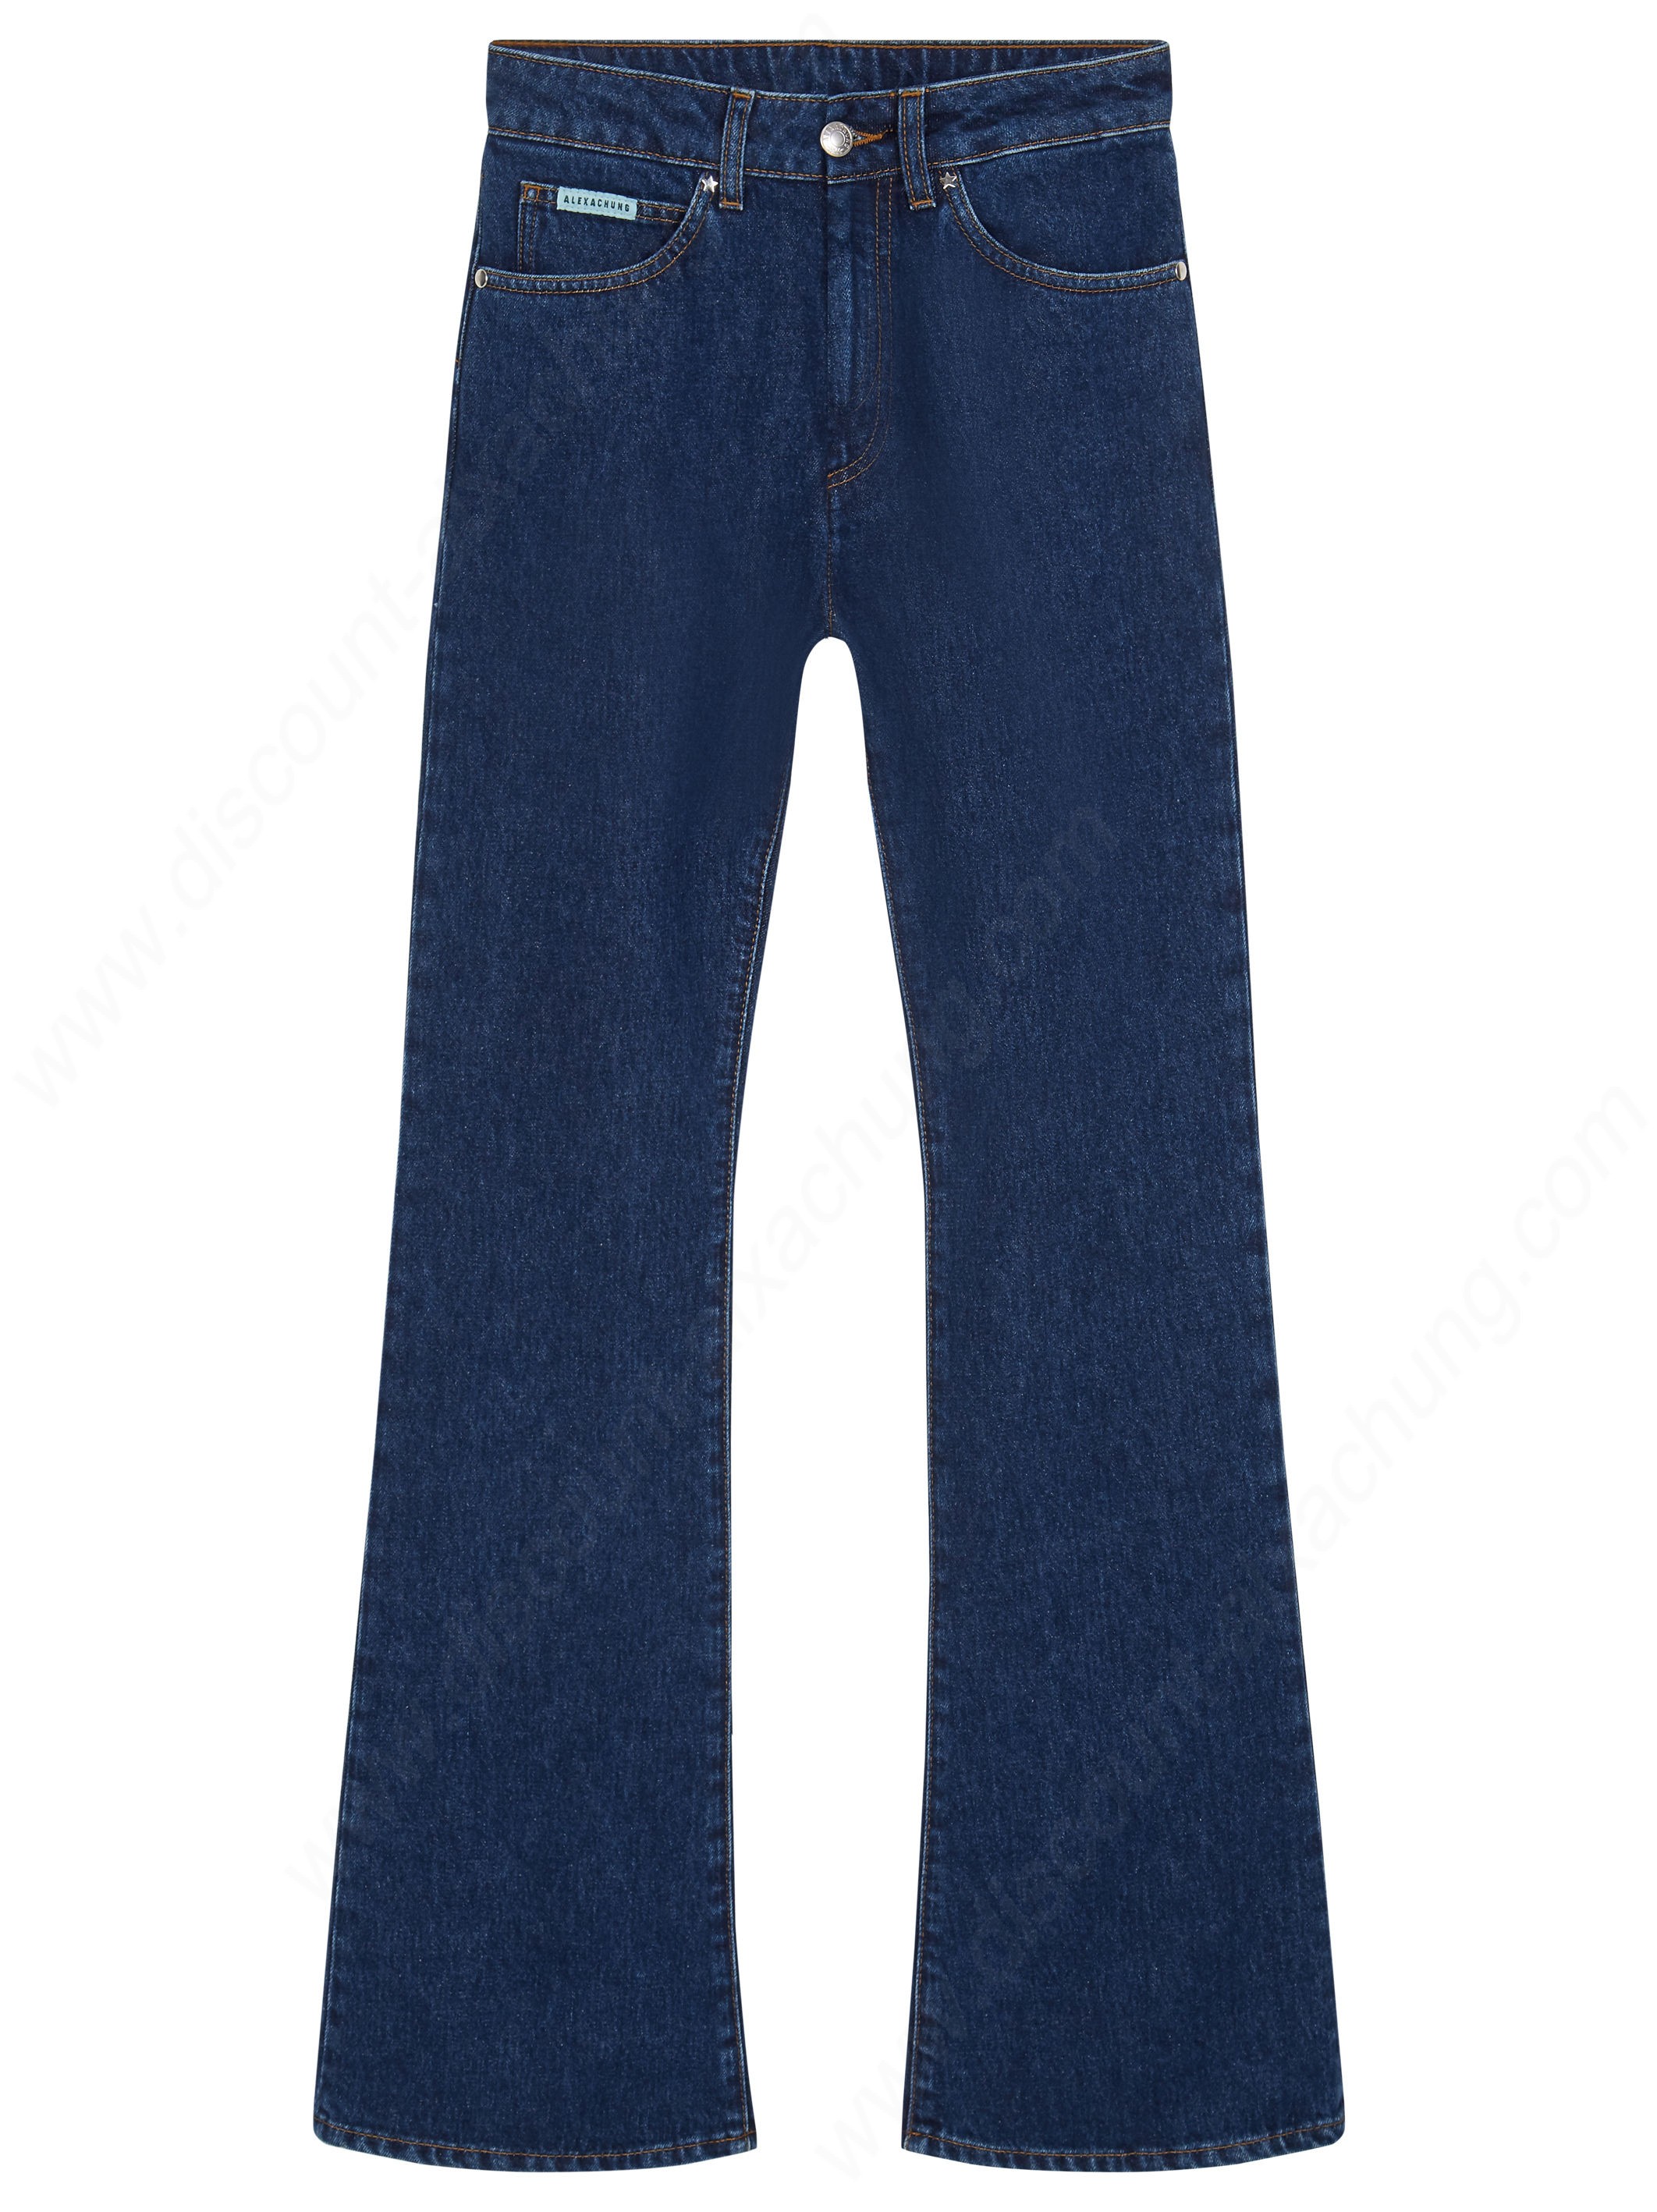 Alexachung Dark Wash Flared Jeans - Alexachung Dark Wash Flared Jeans